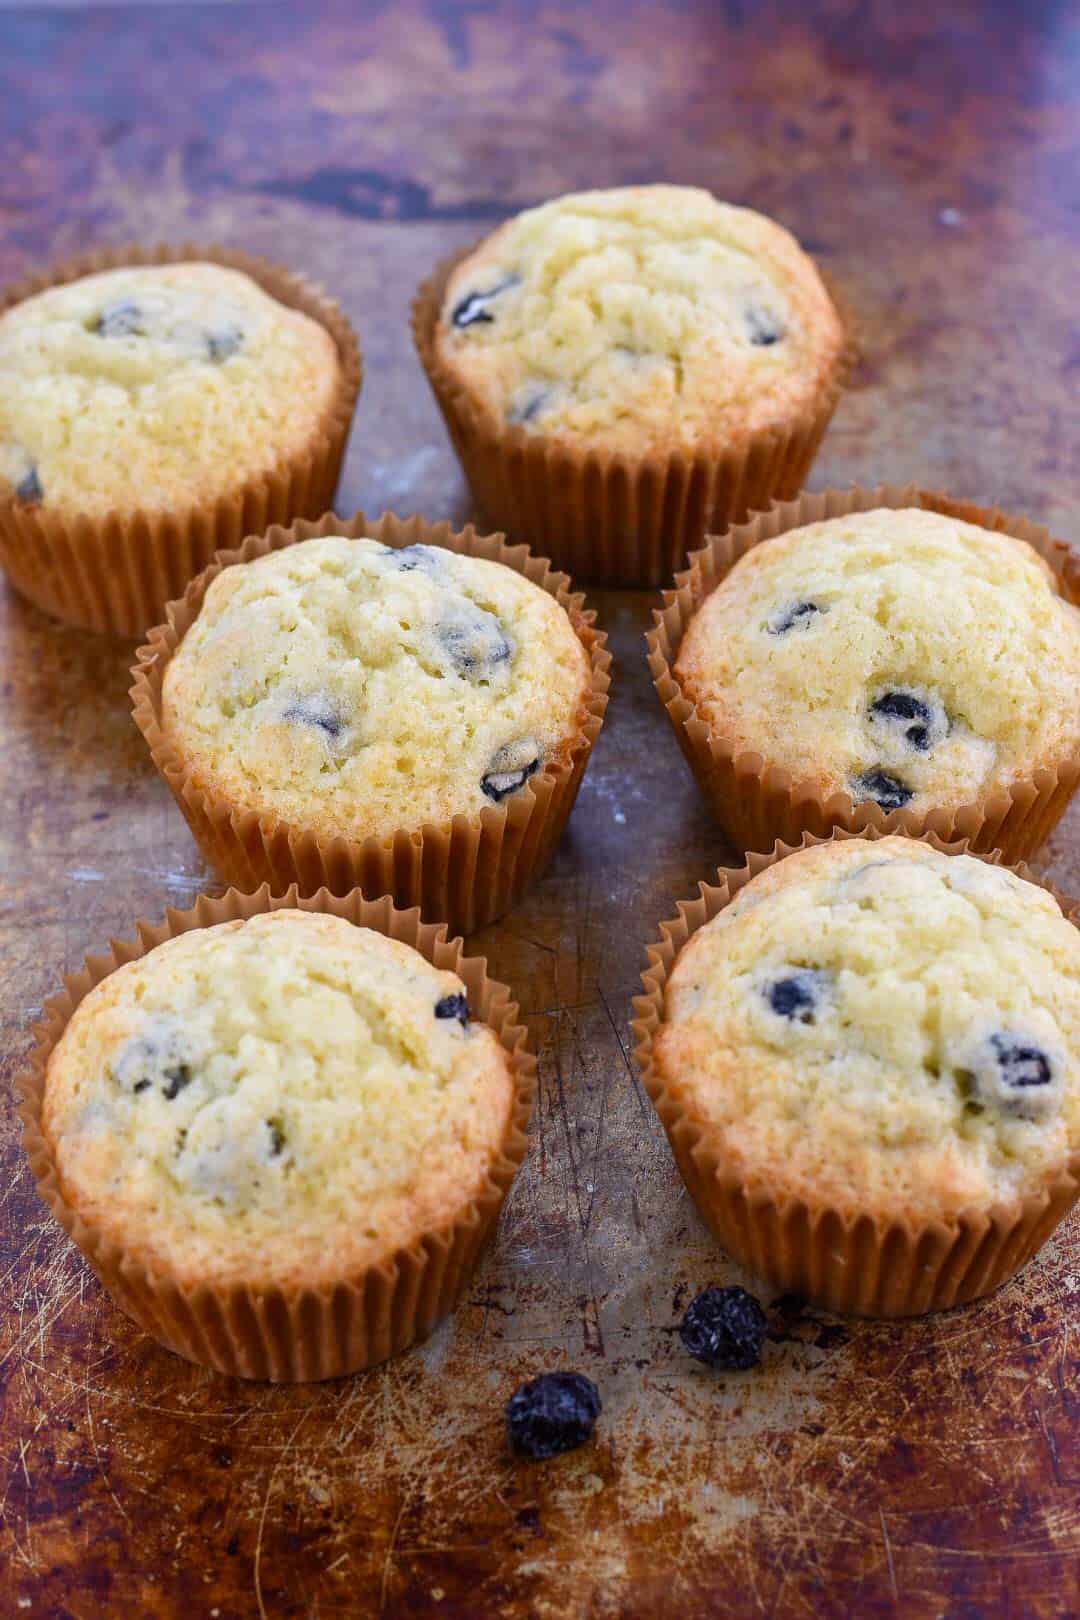 jiffy blueberry muffin copycat recipe sitting on a baking sheet